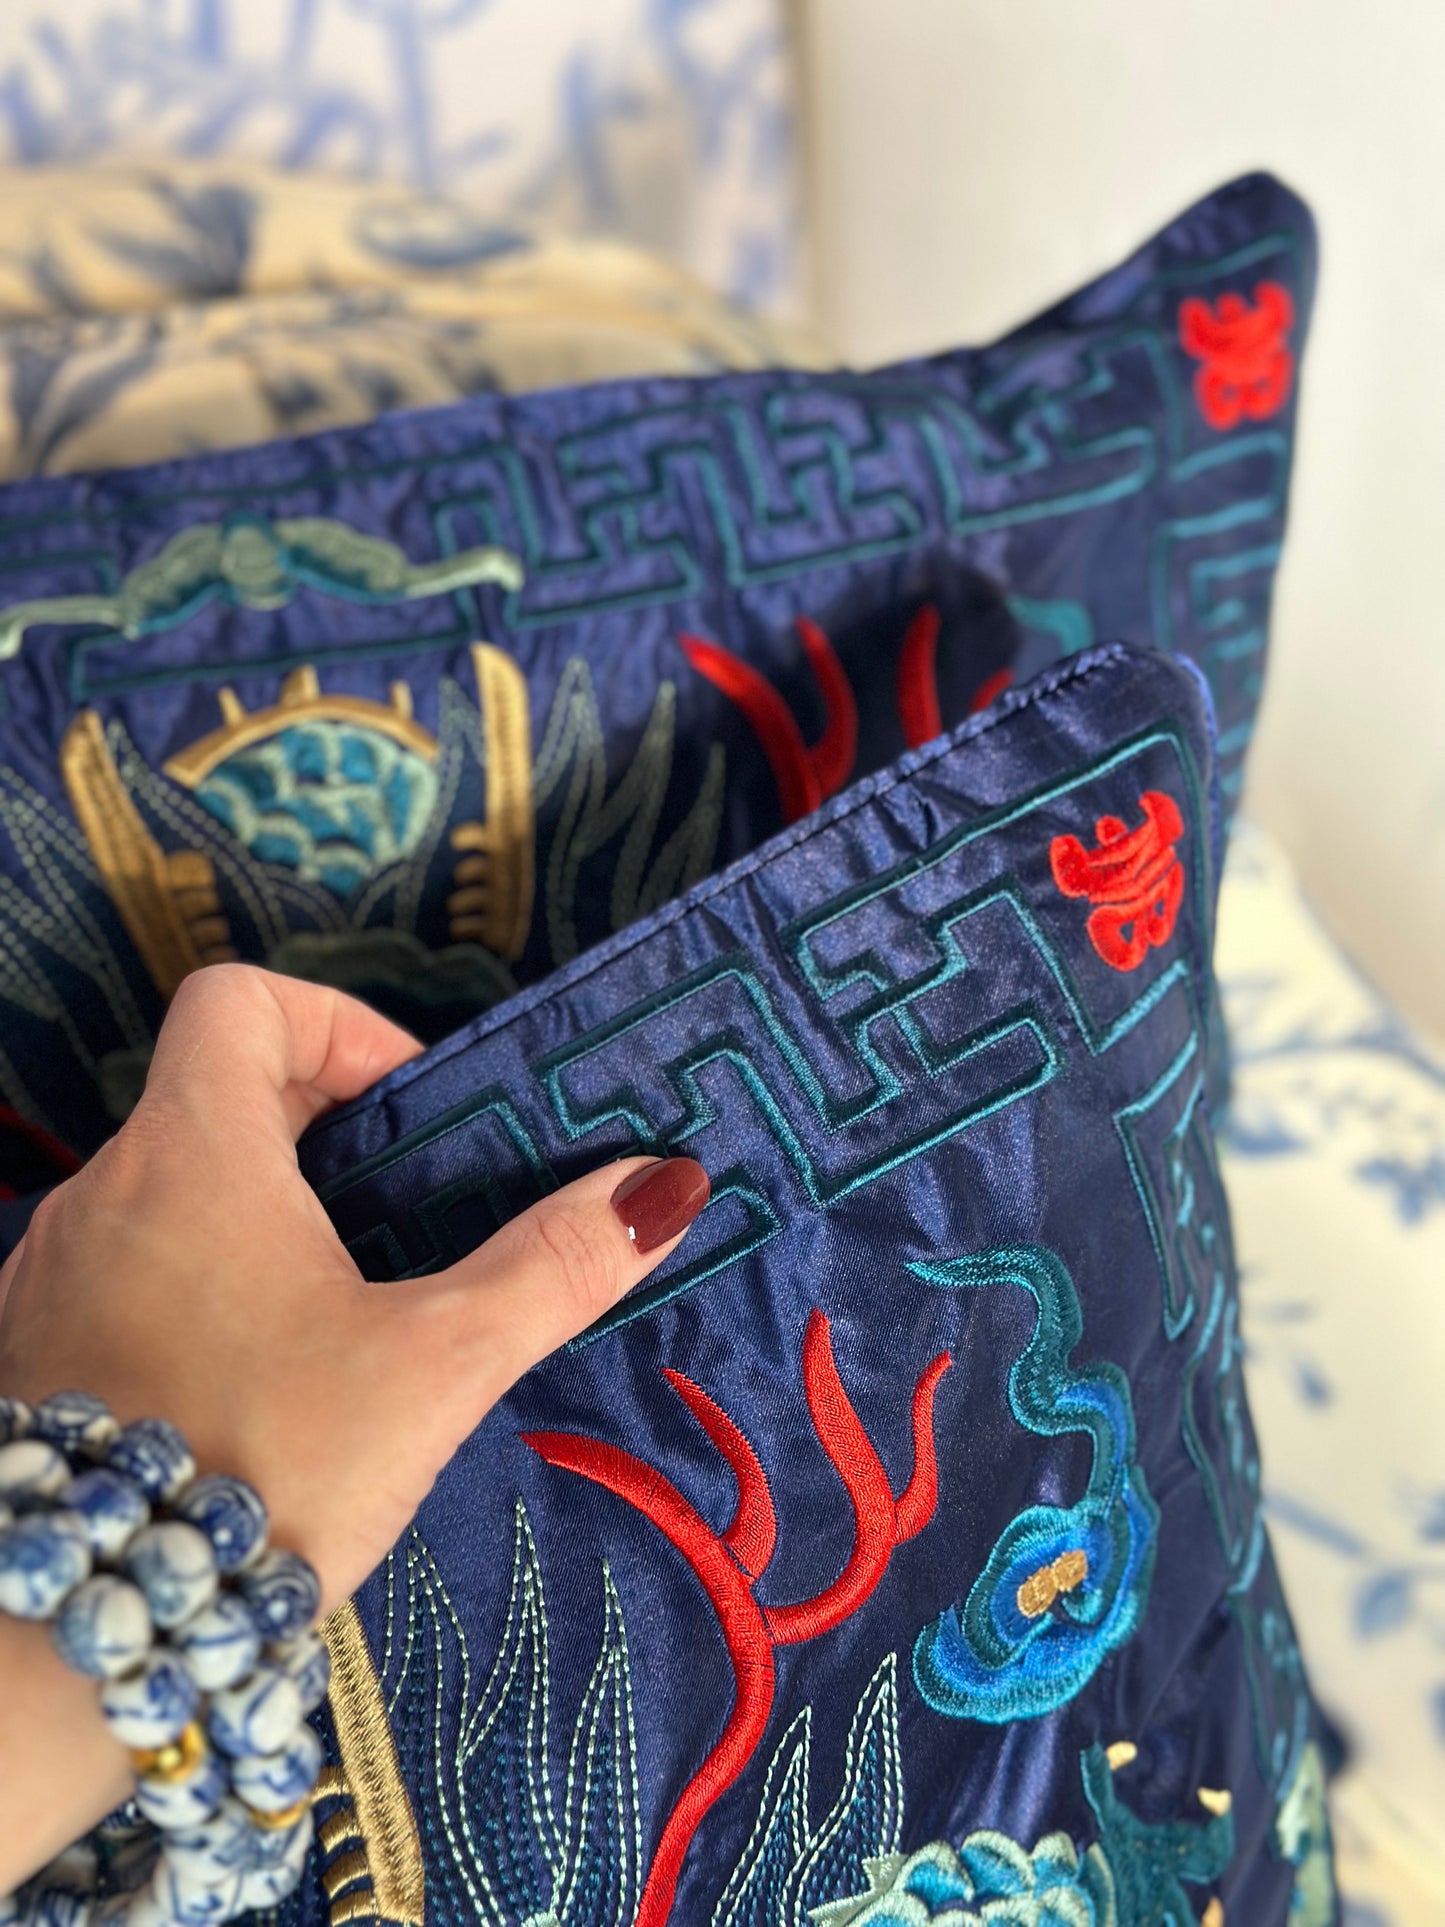 NEW - Cobalt & Red, 20x20" Silk Dragon, Embroidered Pillow W/ Insert